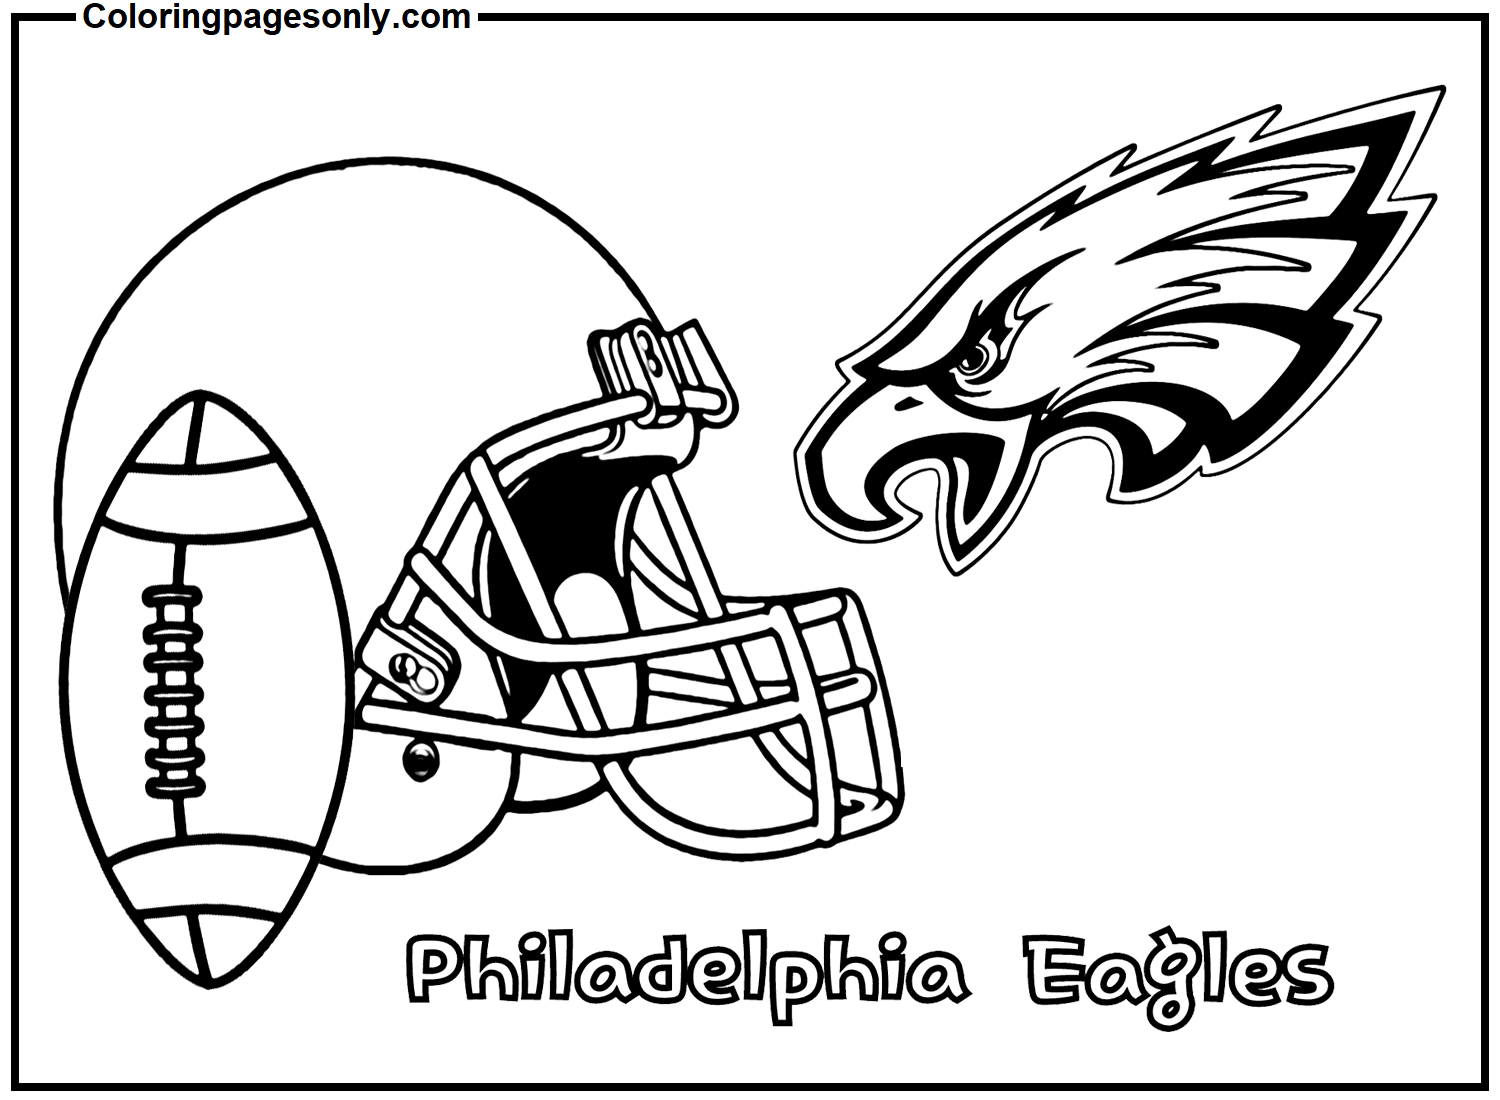 Philadelphia Eagles Bild von Philadelphia Eagles